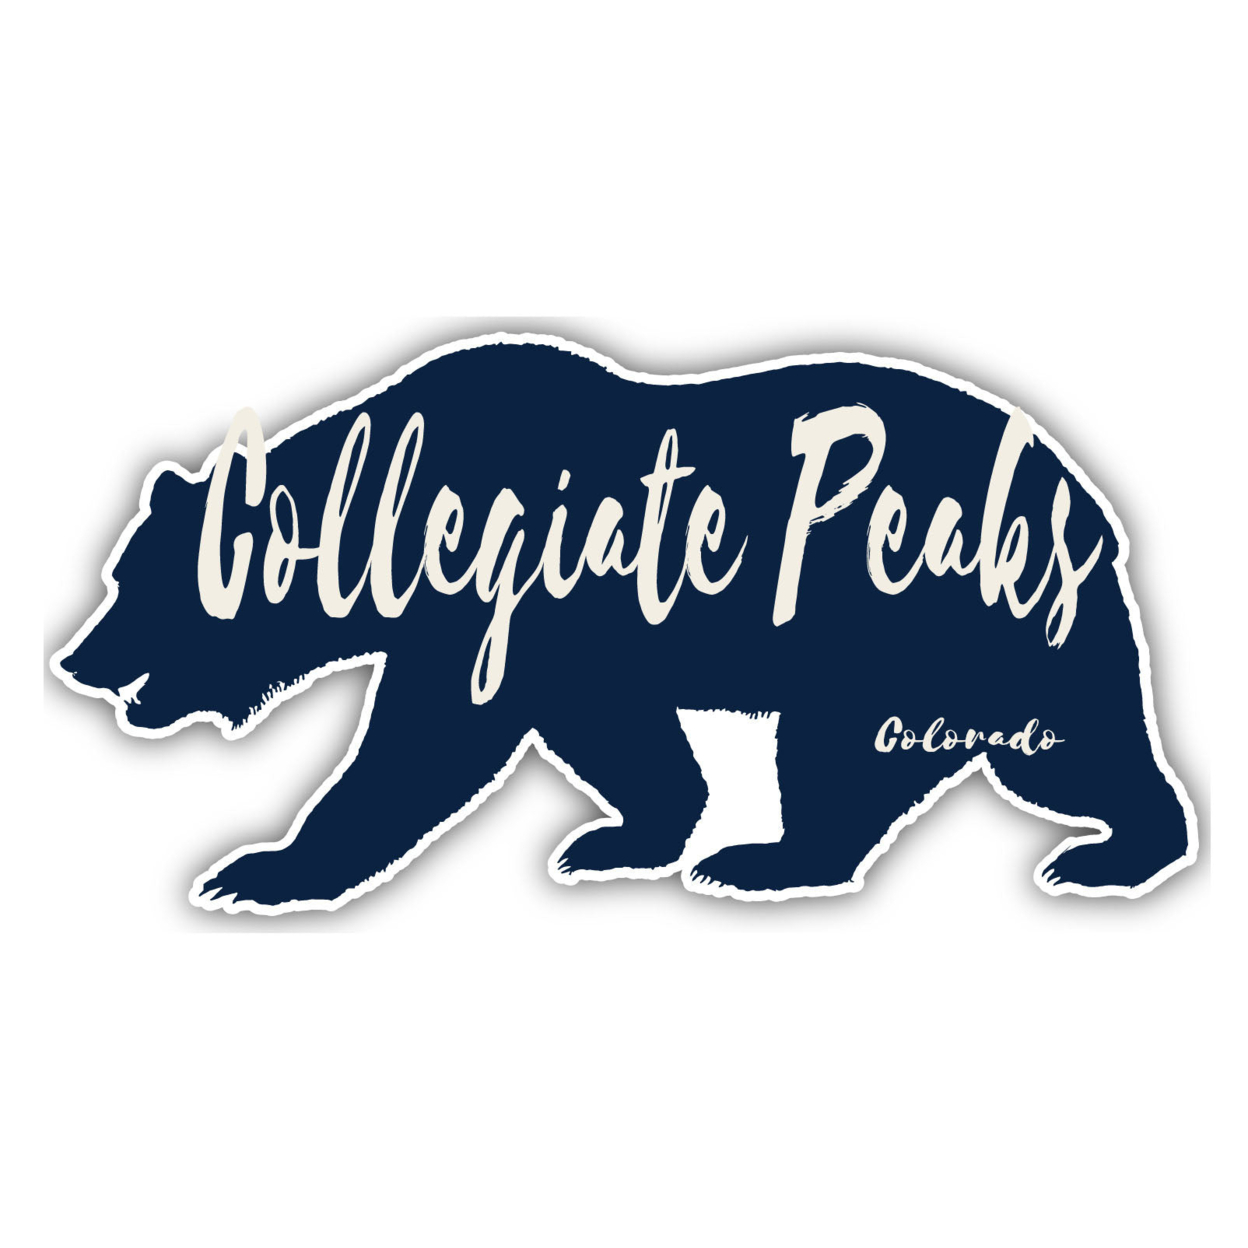 Collegiate Peaks Colorado Souvenir Decorative Stickers (Choose Theme And Size) - 4-Pack, 6-Inch, Bear